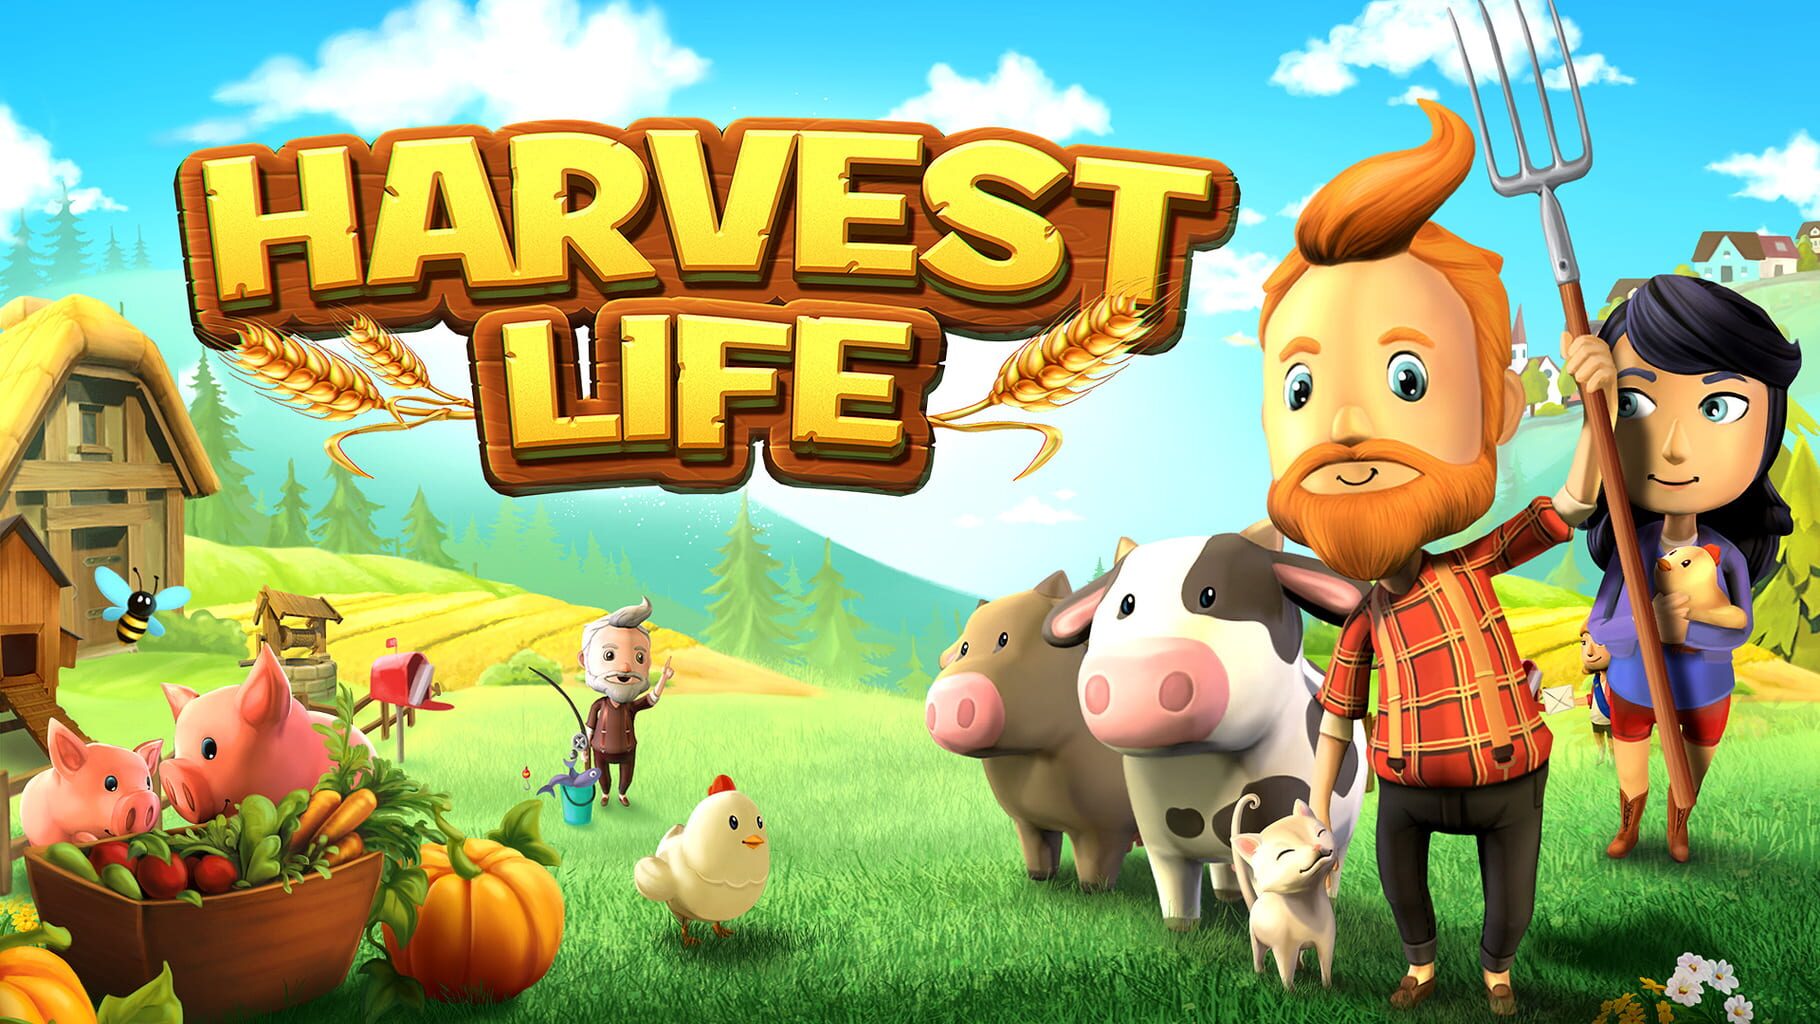 Harvest life artwork